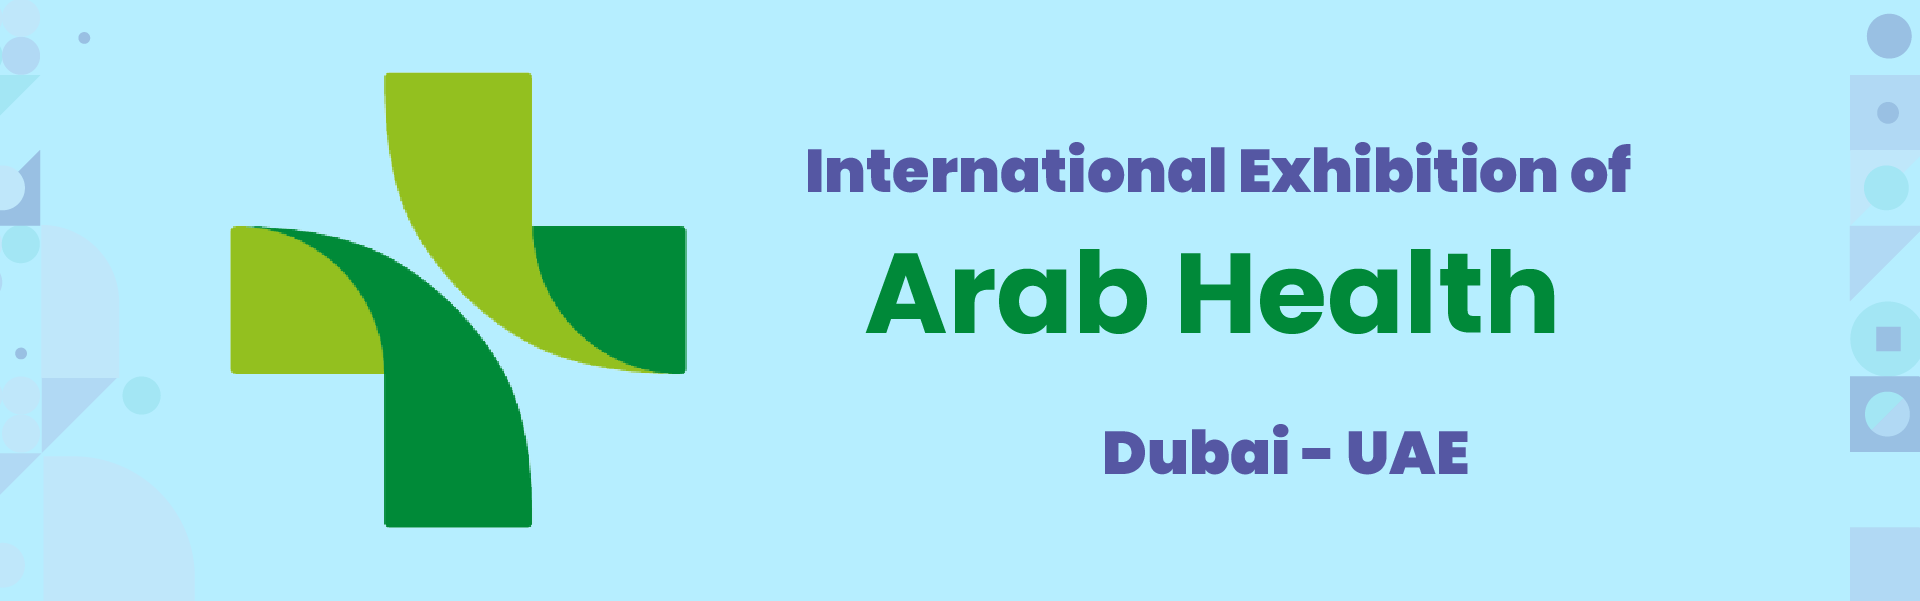 Arab Health Exhibition Dubai United Arab Emirates